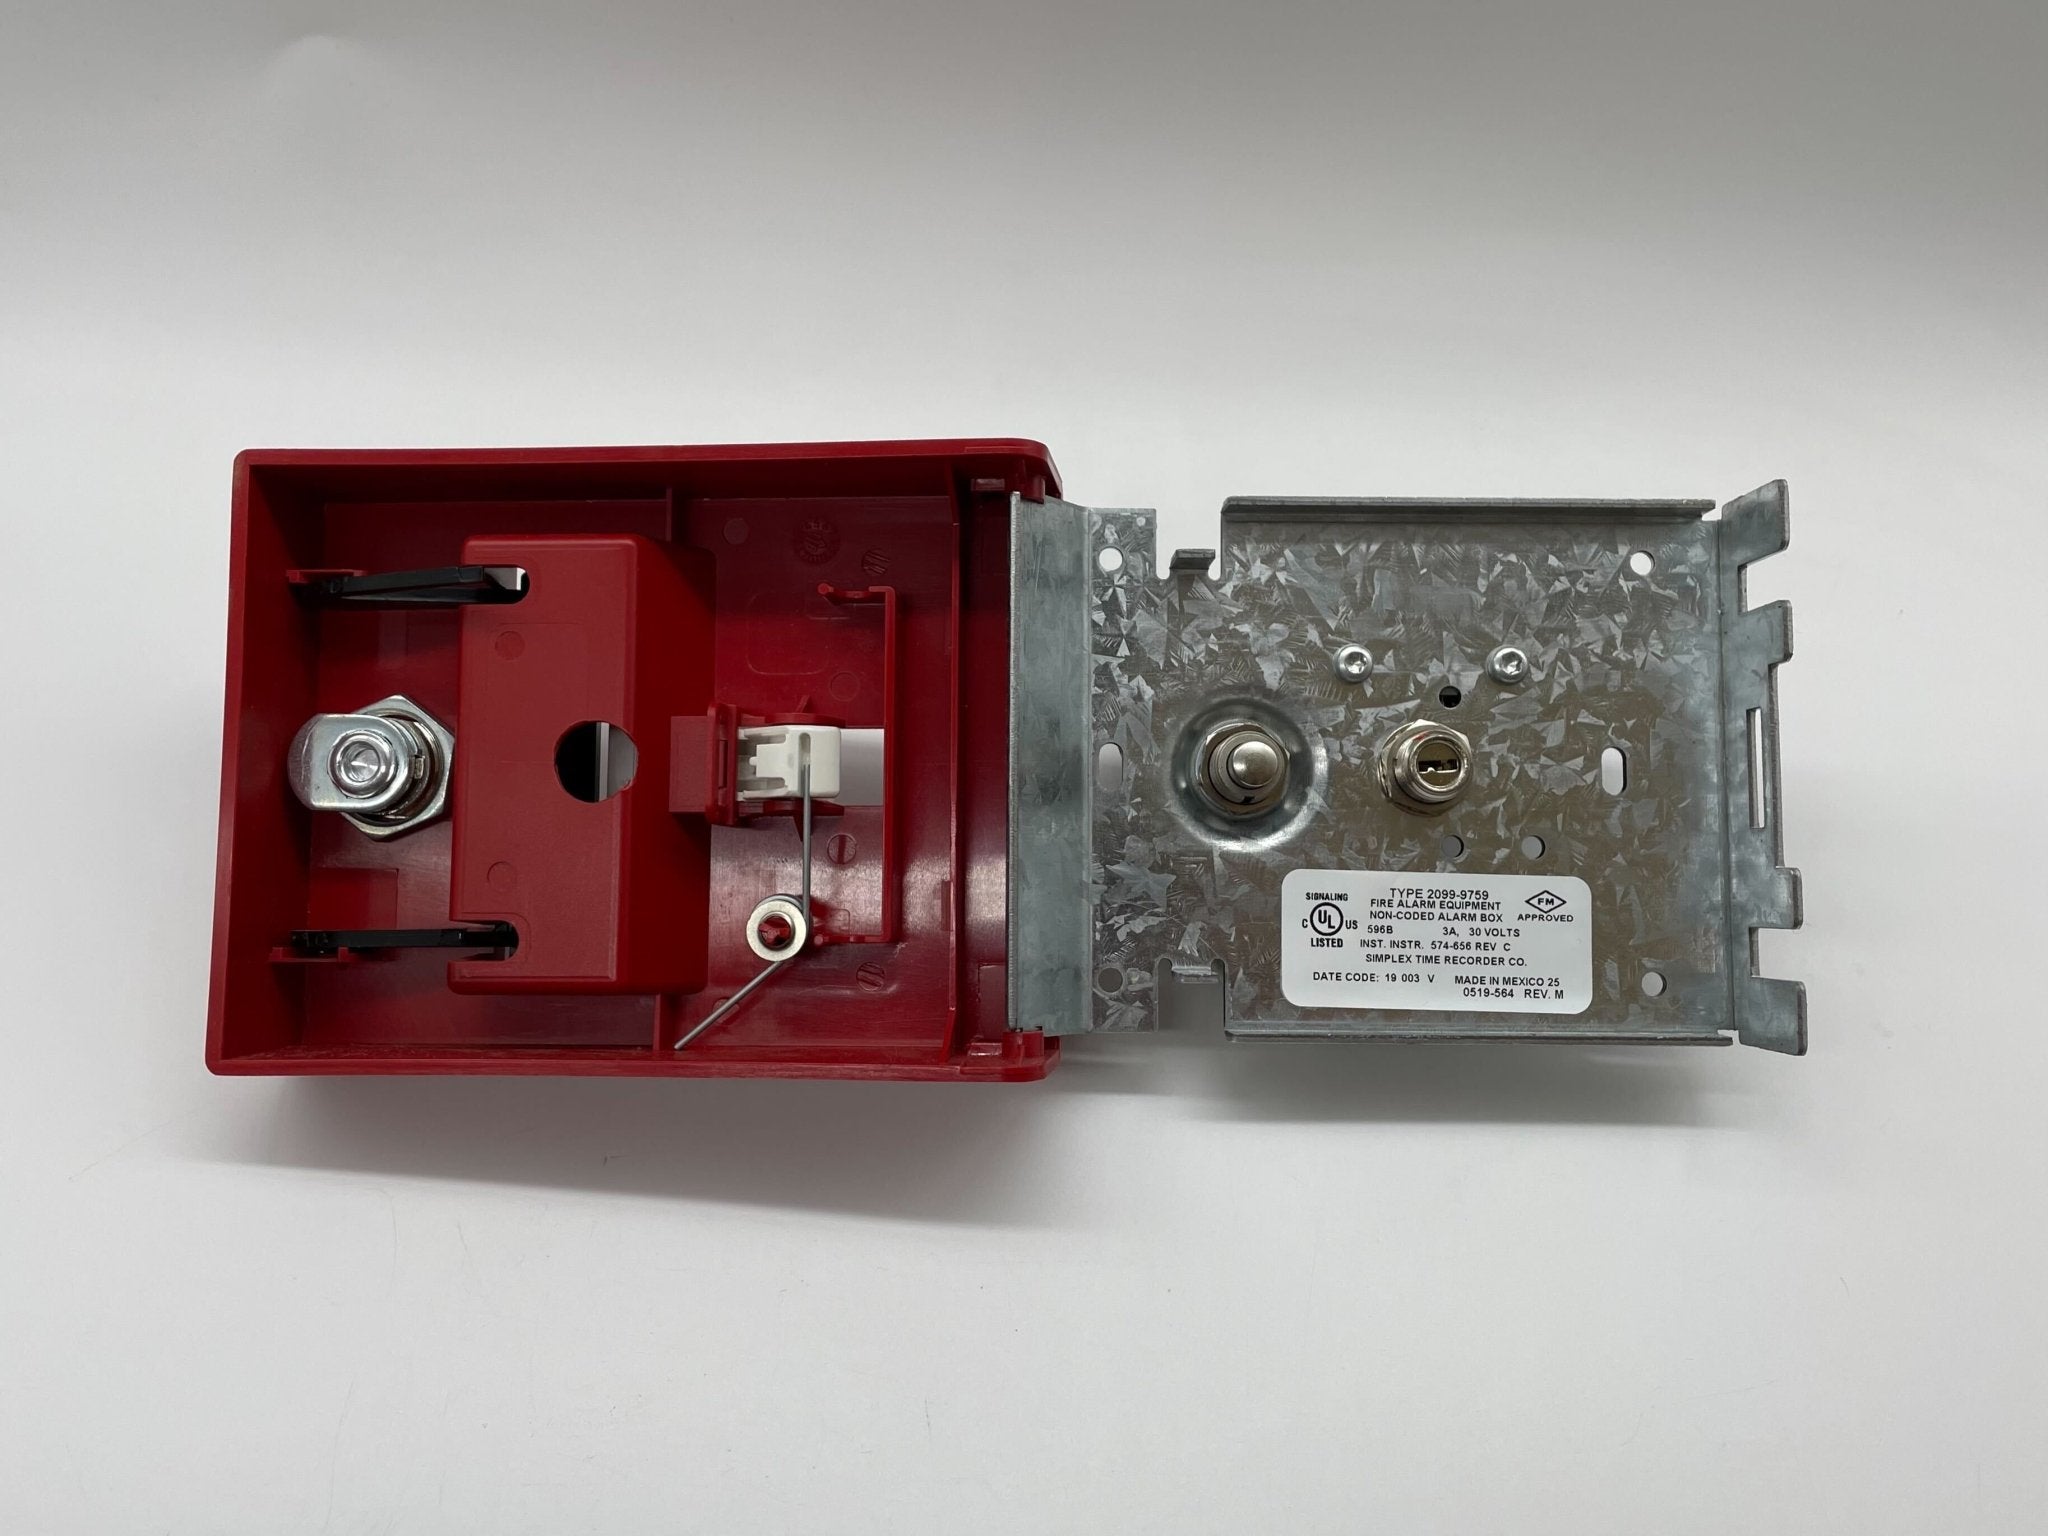 Simplex 2099-9759 - The Fire Alarm Supplier